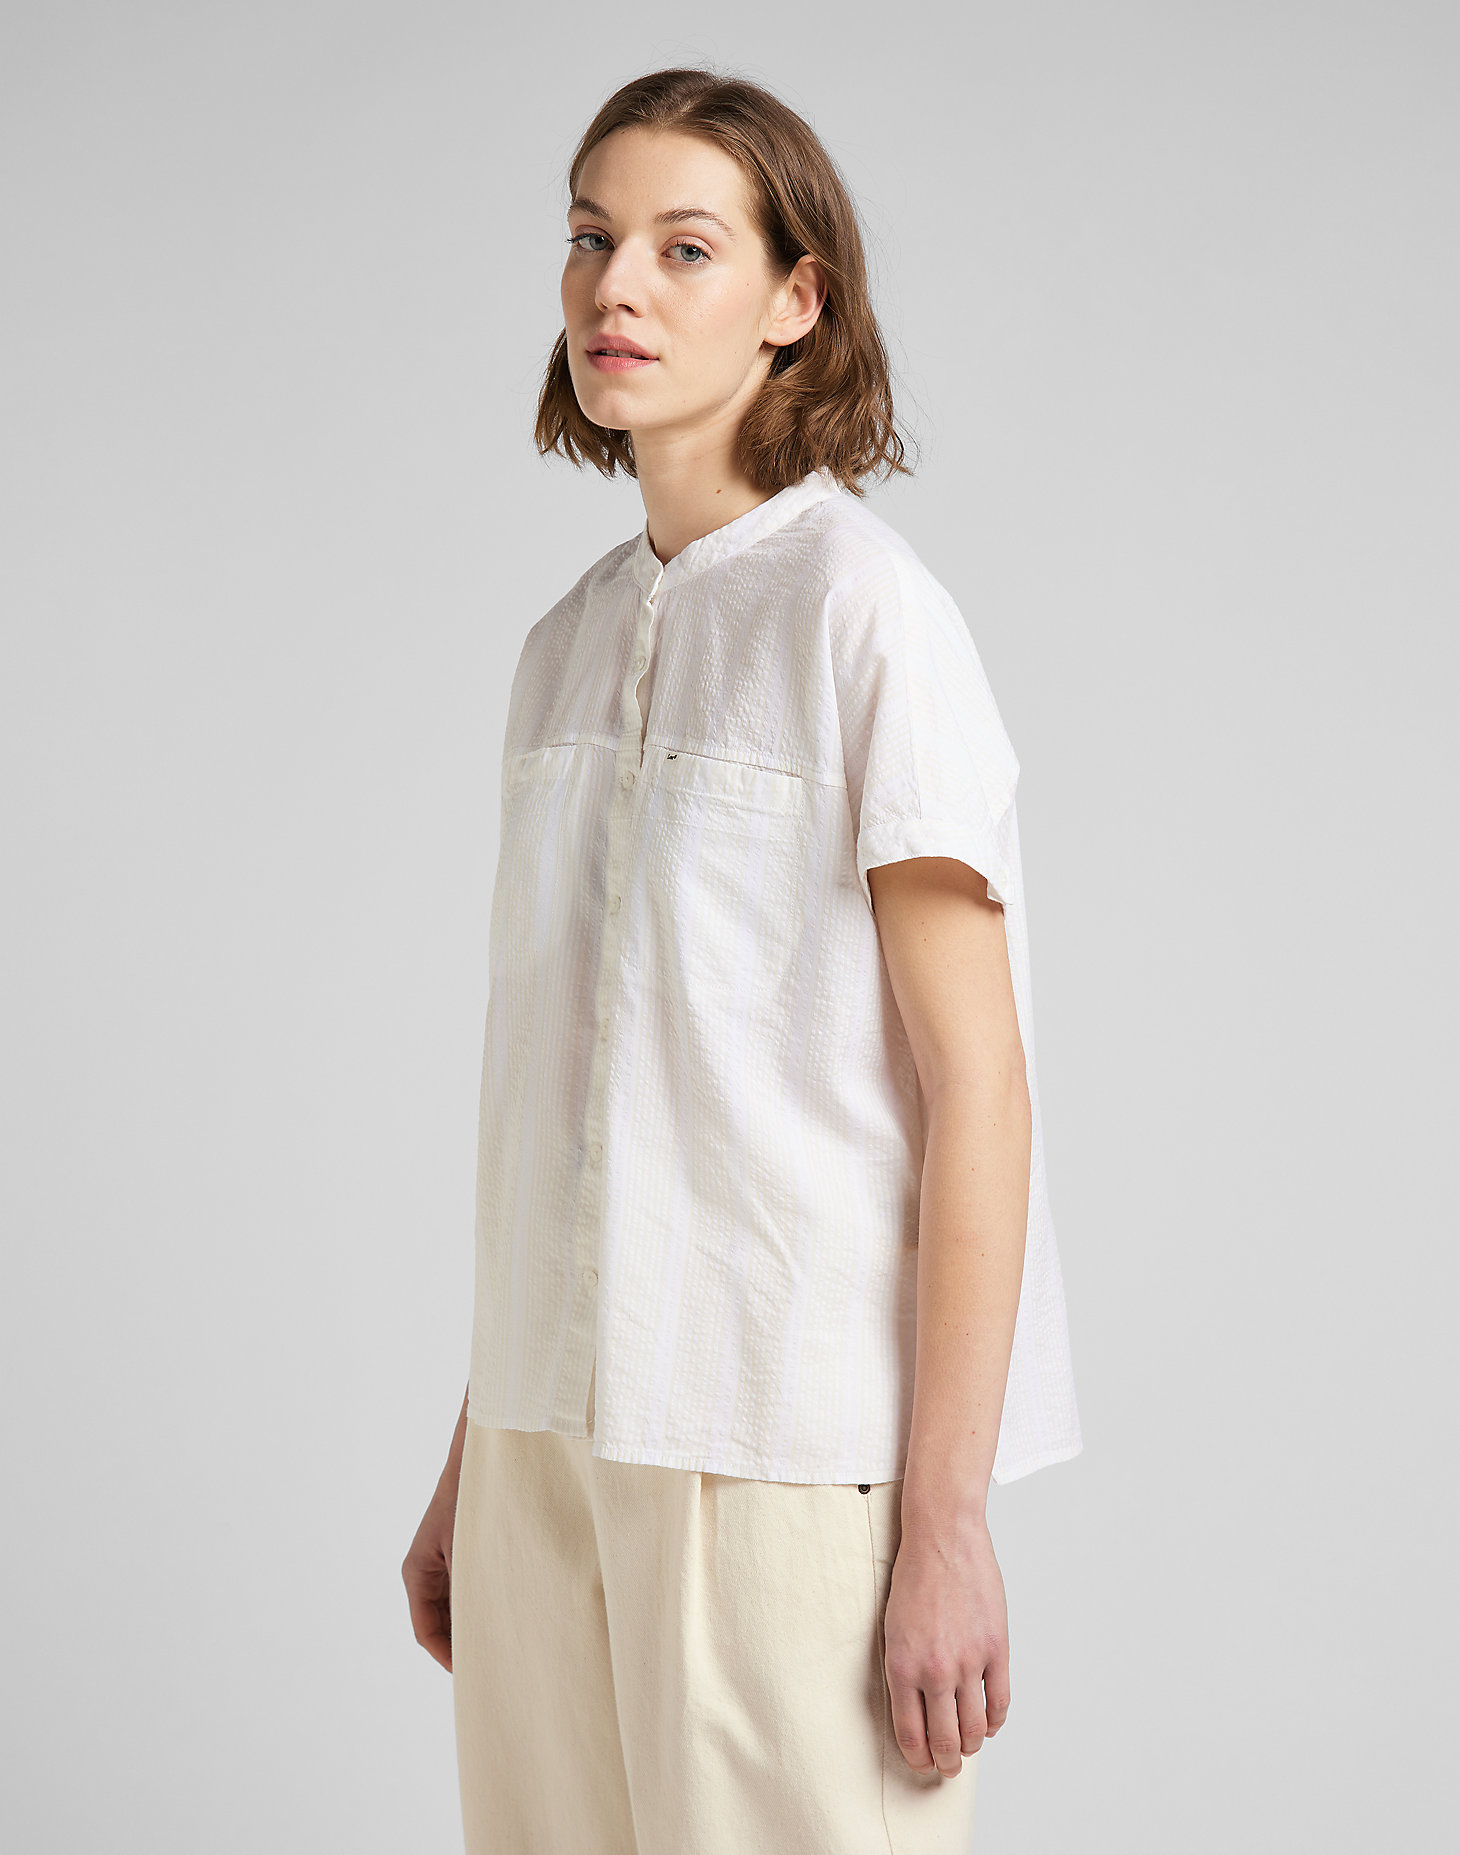 Cap Sleeve Shirt in Bright White alternative view 3